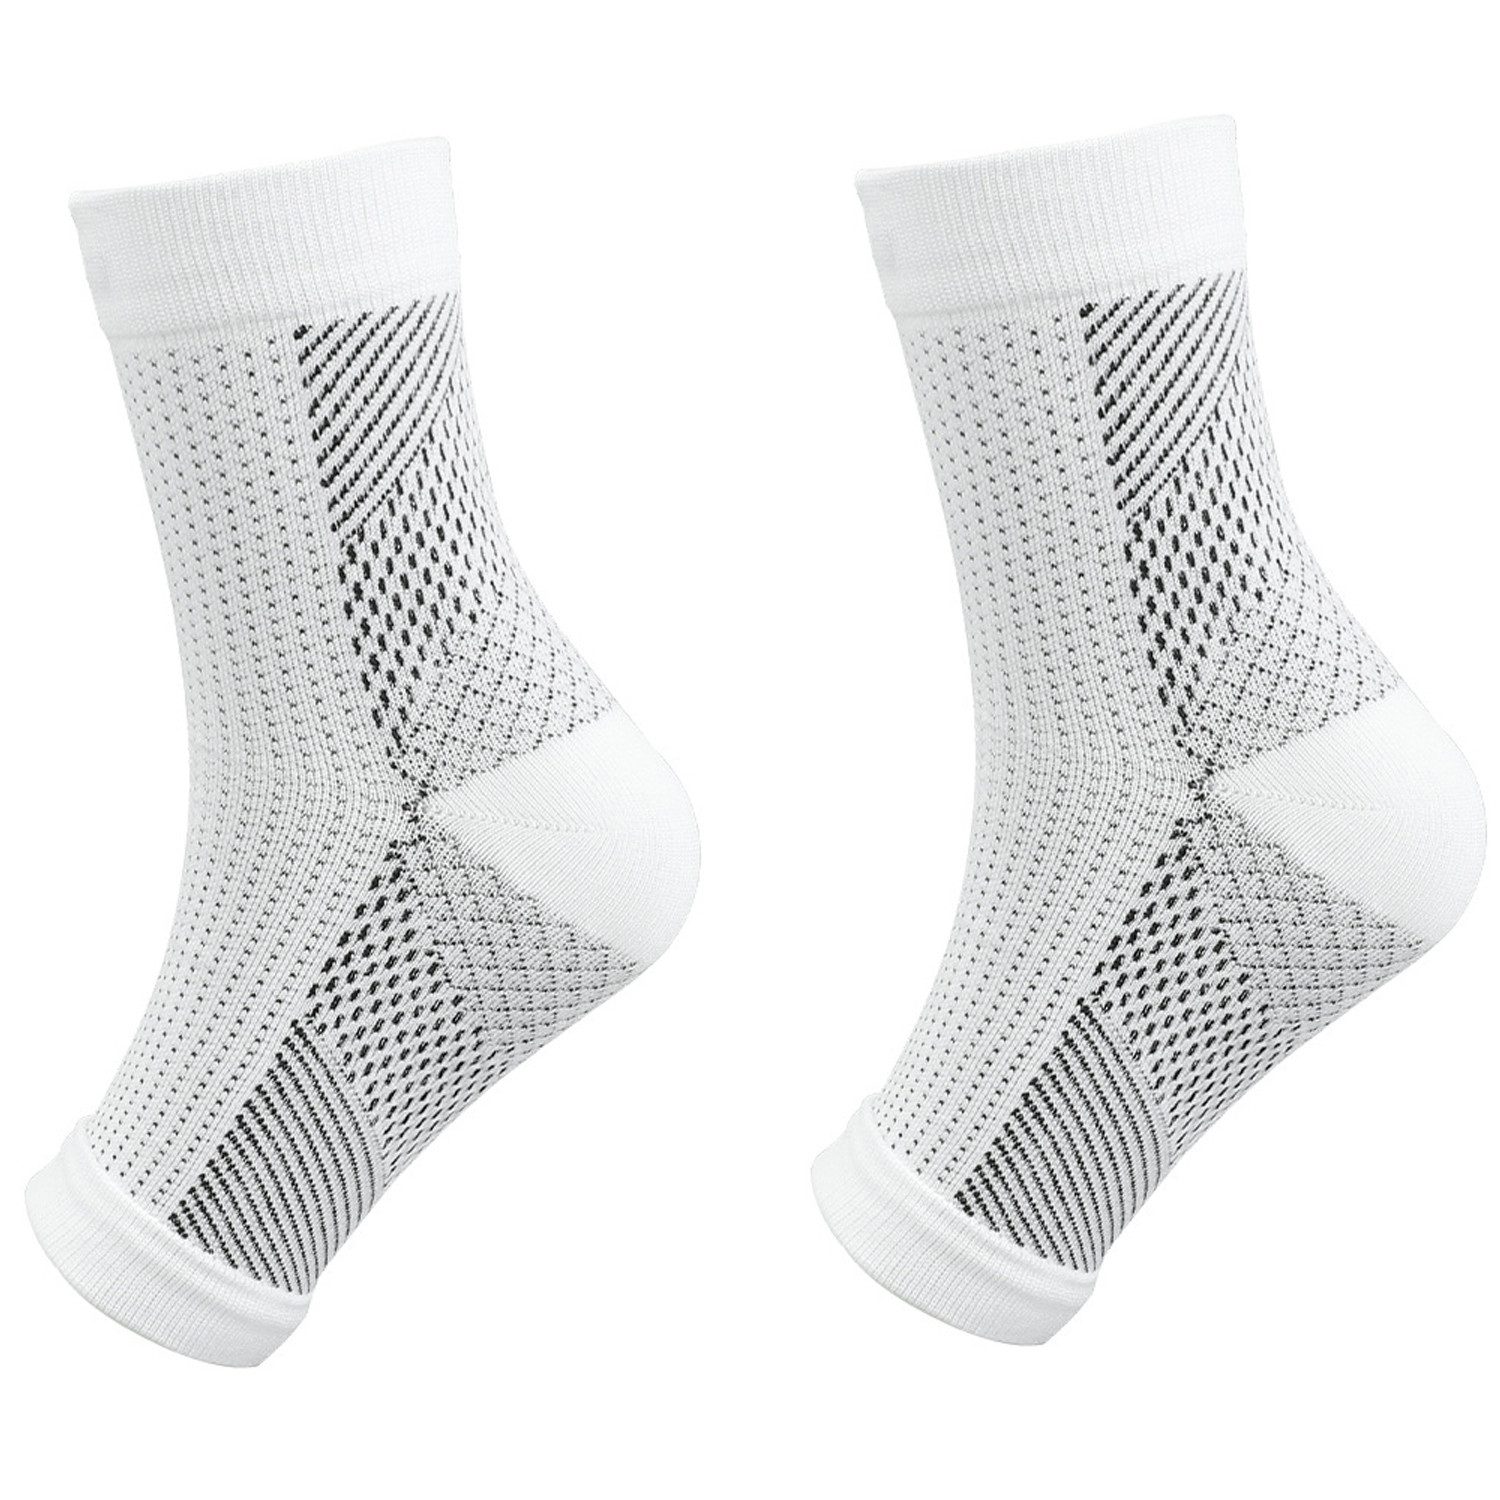 FIDDY Socken Orthopädische Kompressionssocken, Knöchelbandagen